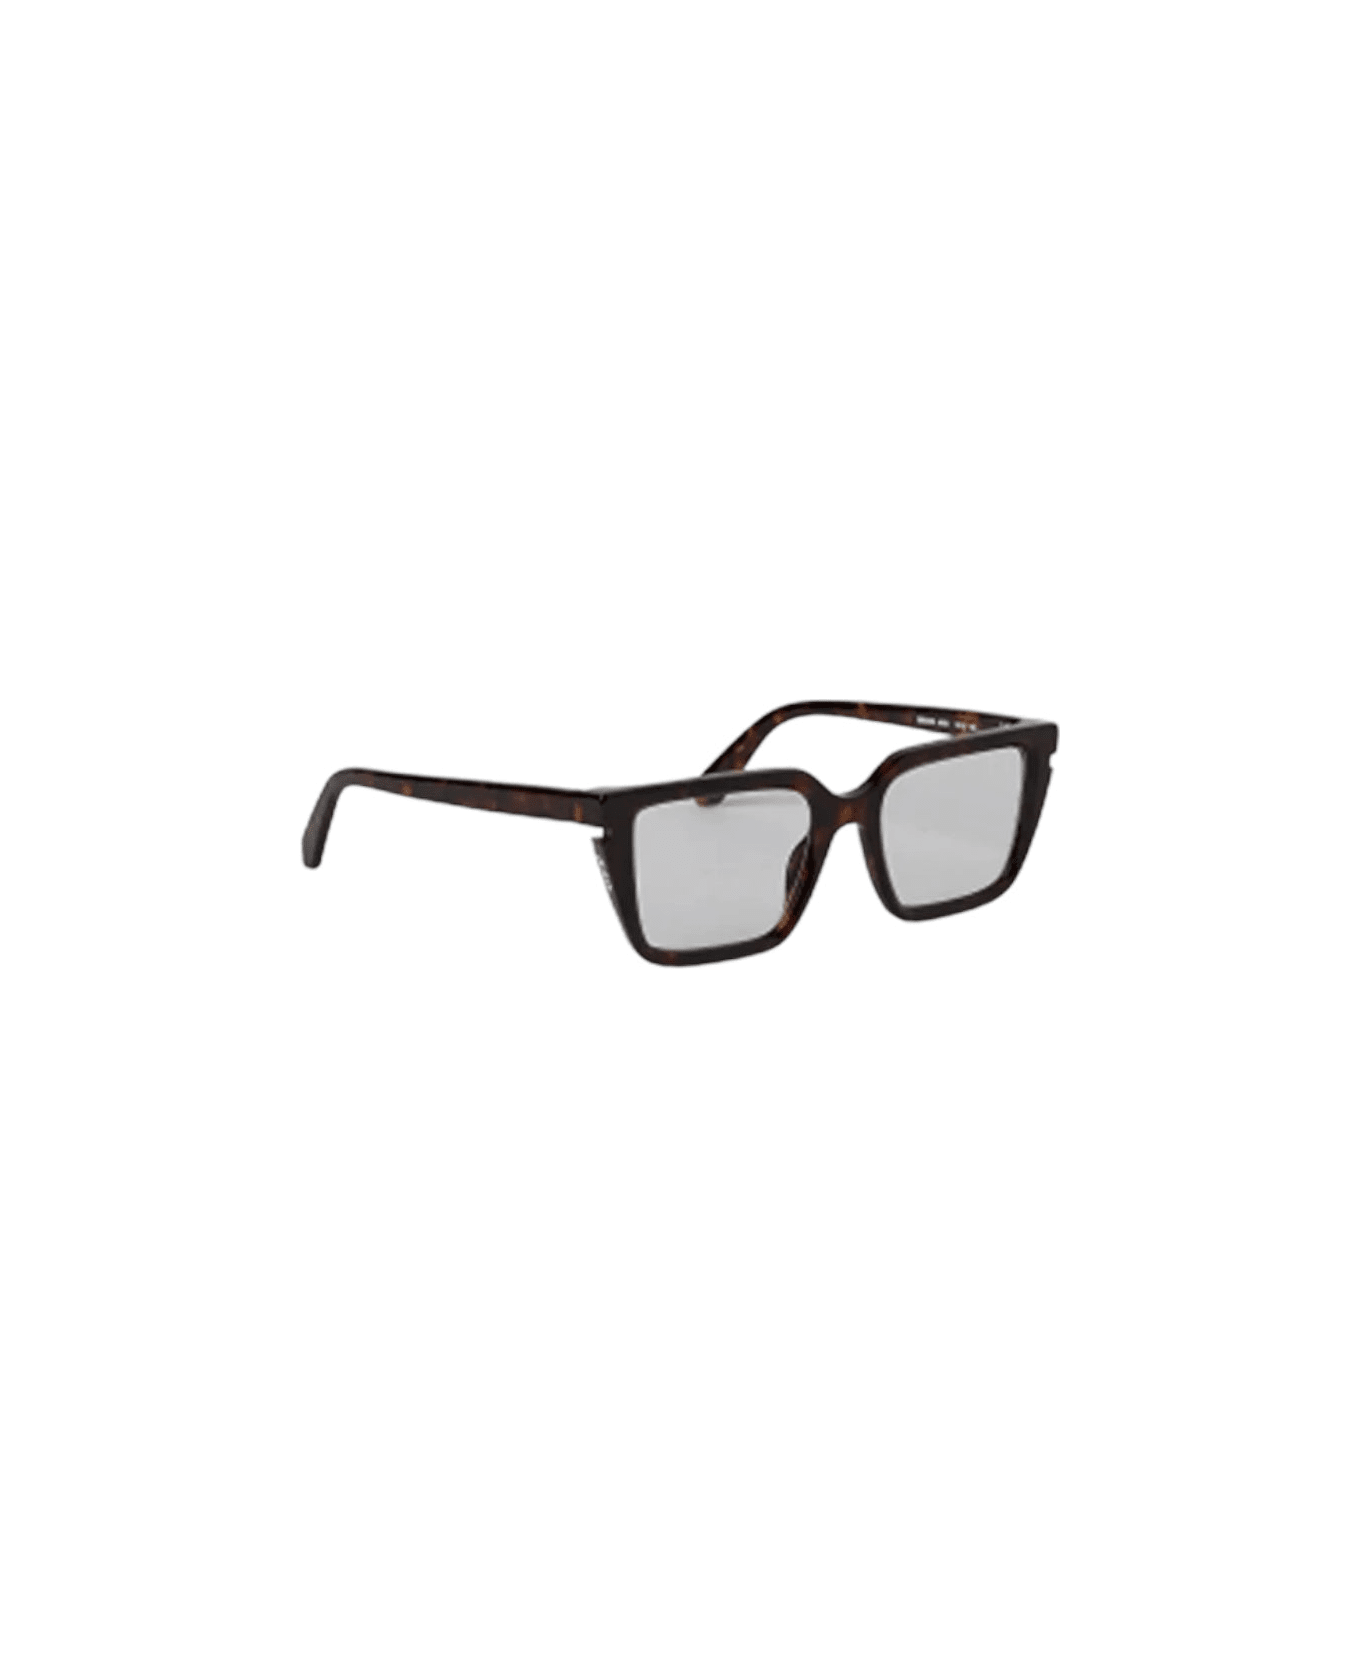 Off-White Style 52 - Oerj052 Glasses